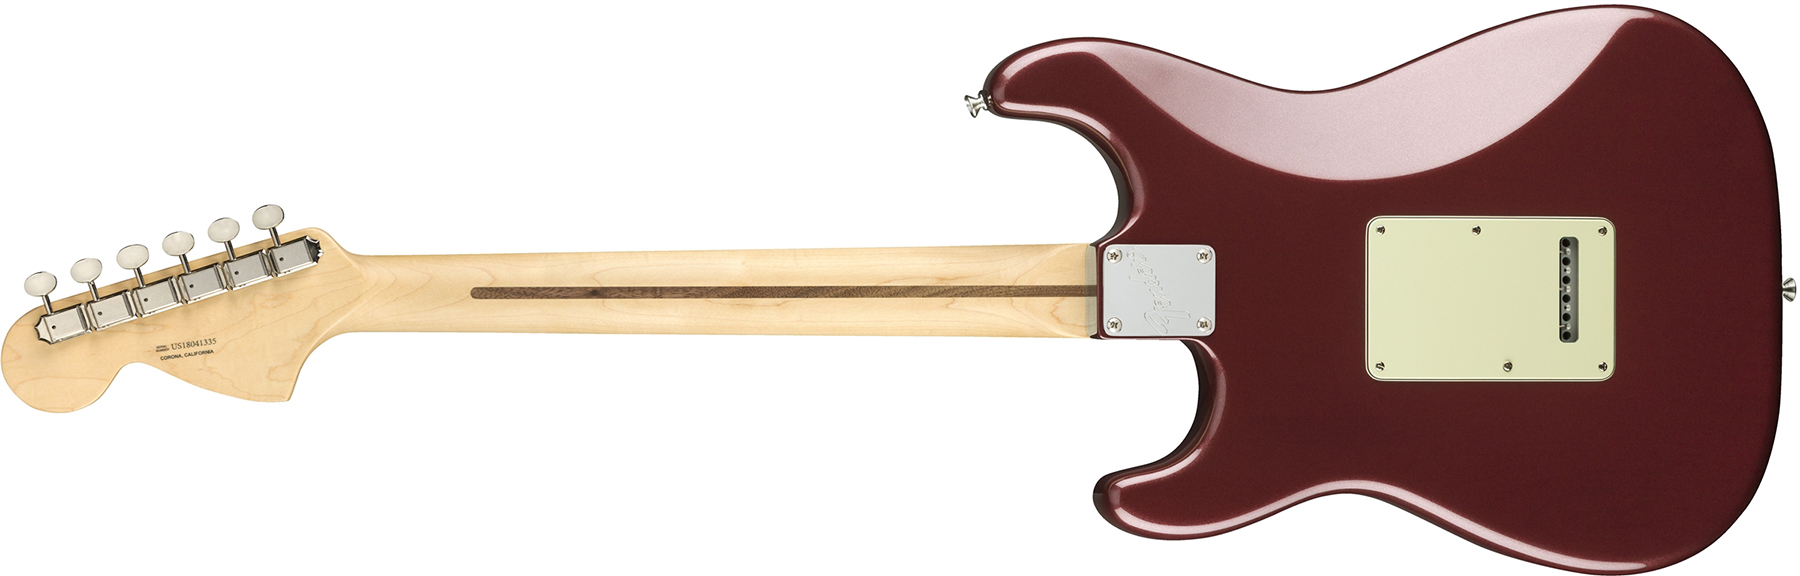 Fender Strat American Performer Usa Hss Rw - Aubergine - Guitarra eléctrica con forma de str. - Variation 1